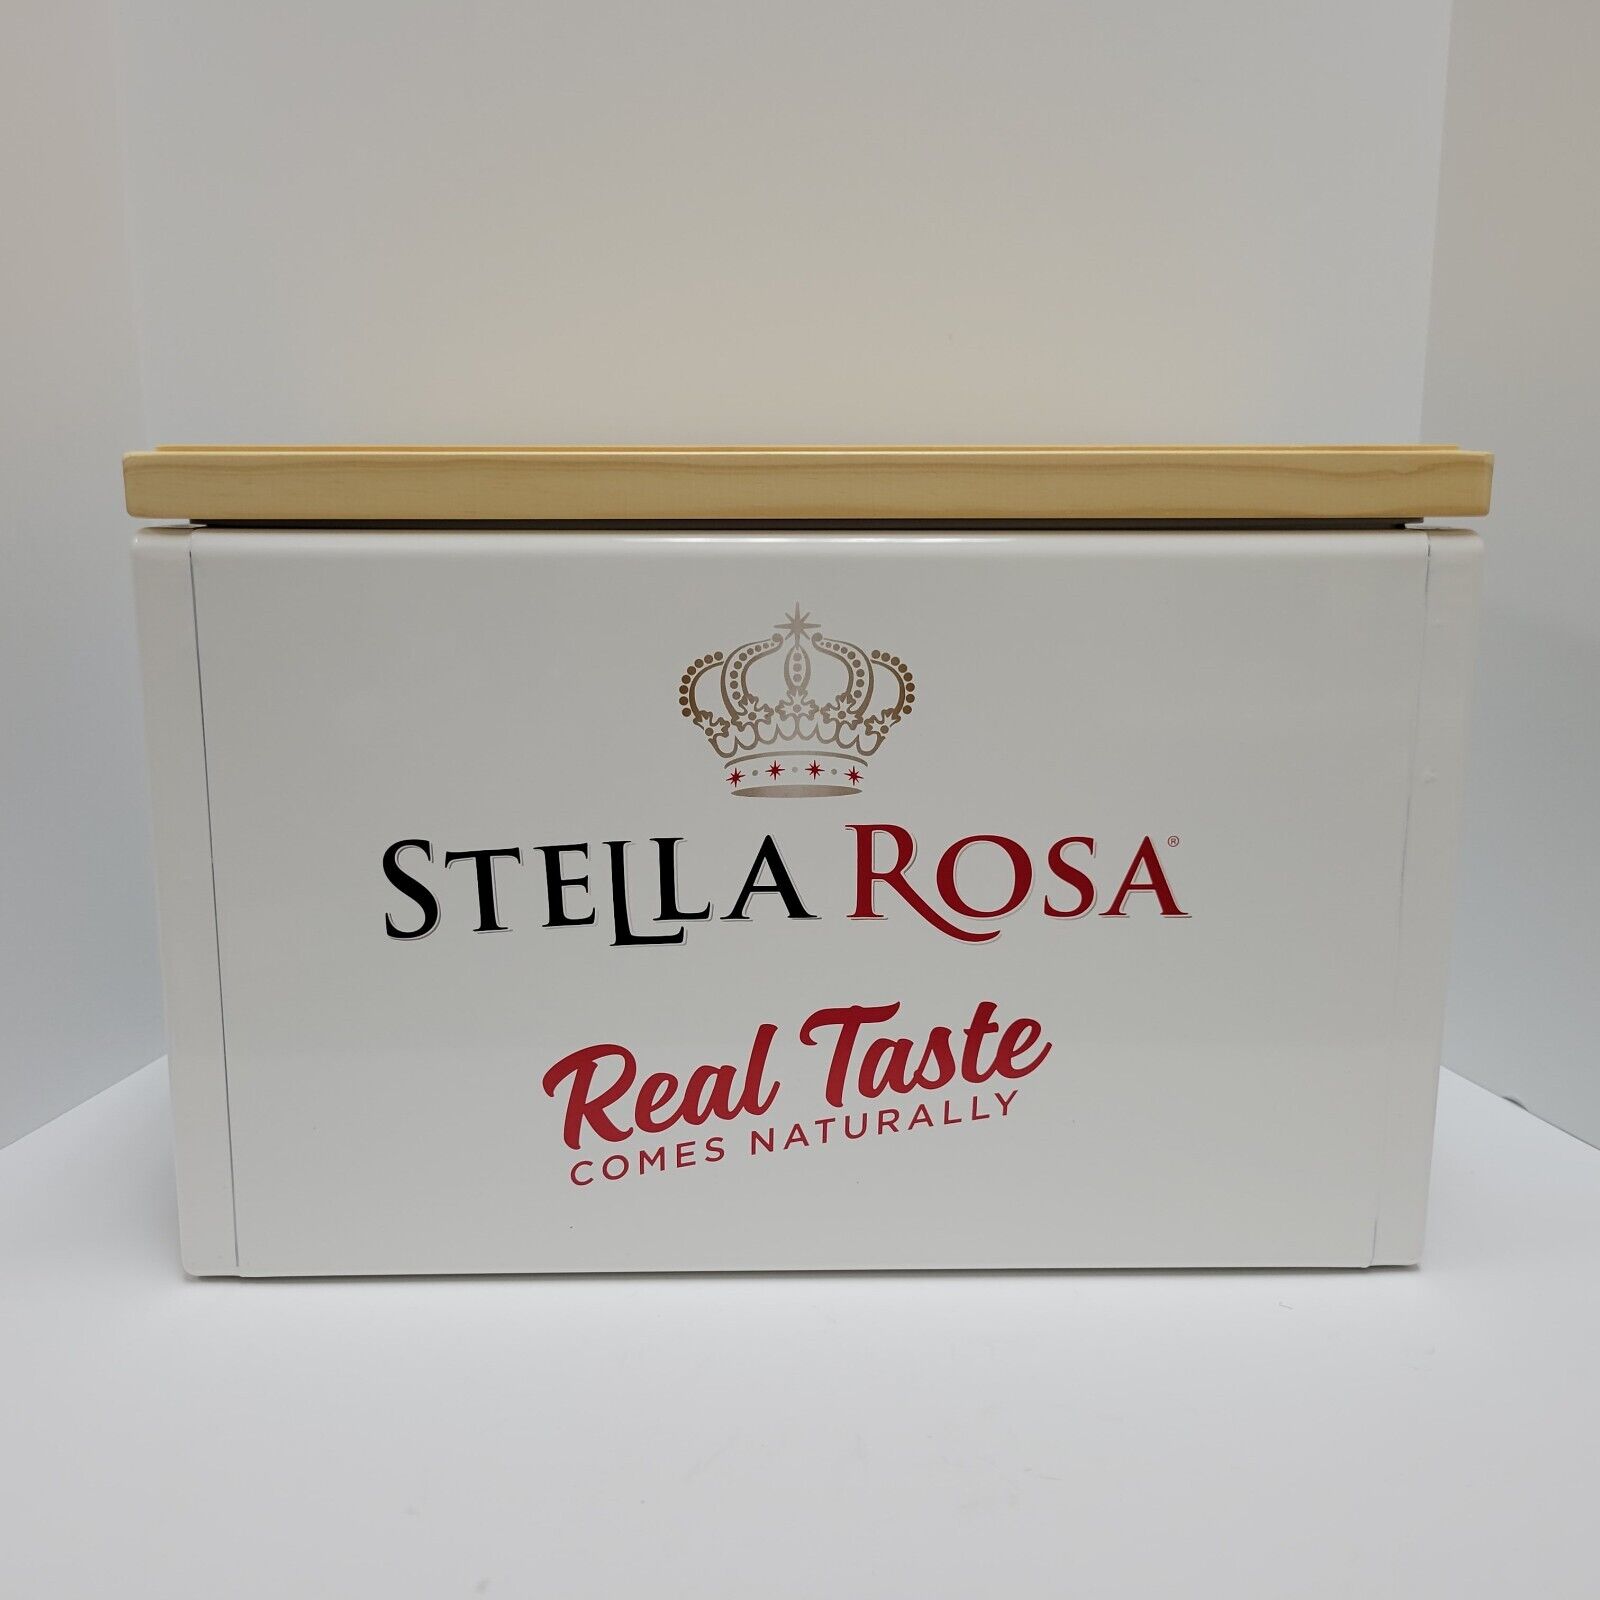 NEW Stella Rose Wine Advertising Retro Style Promotional Metal Cooler Promo Beer